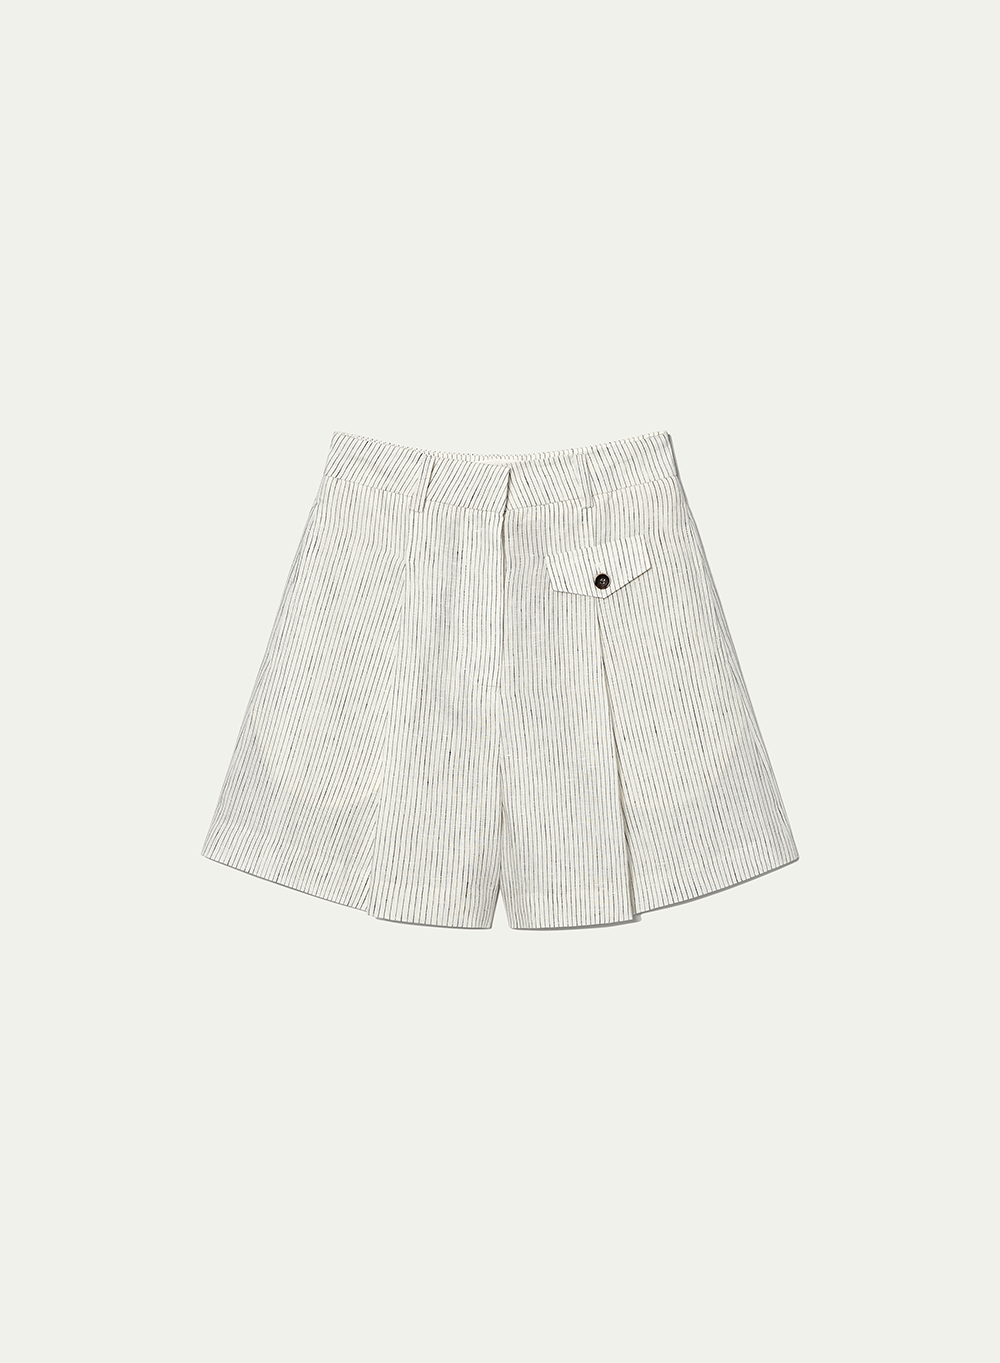 SS21 Summery Shorts From Japan (SHIBAYA) Stripe